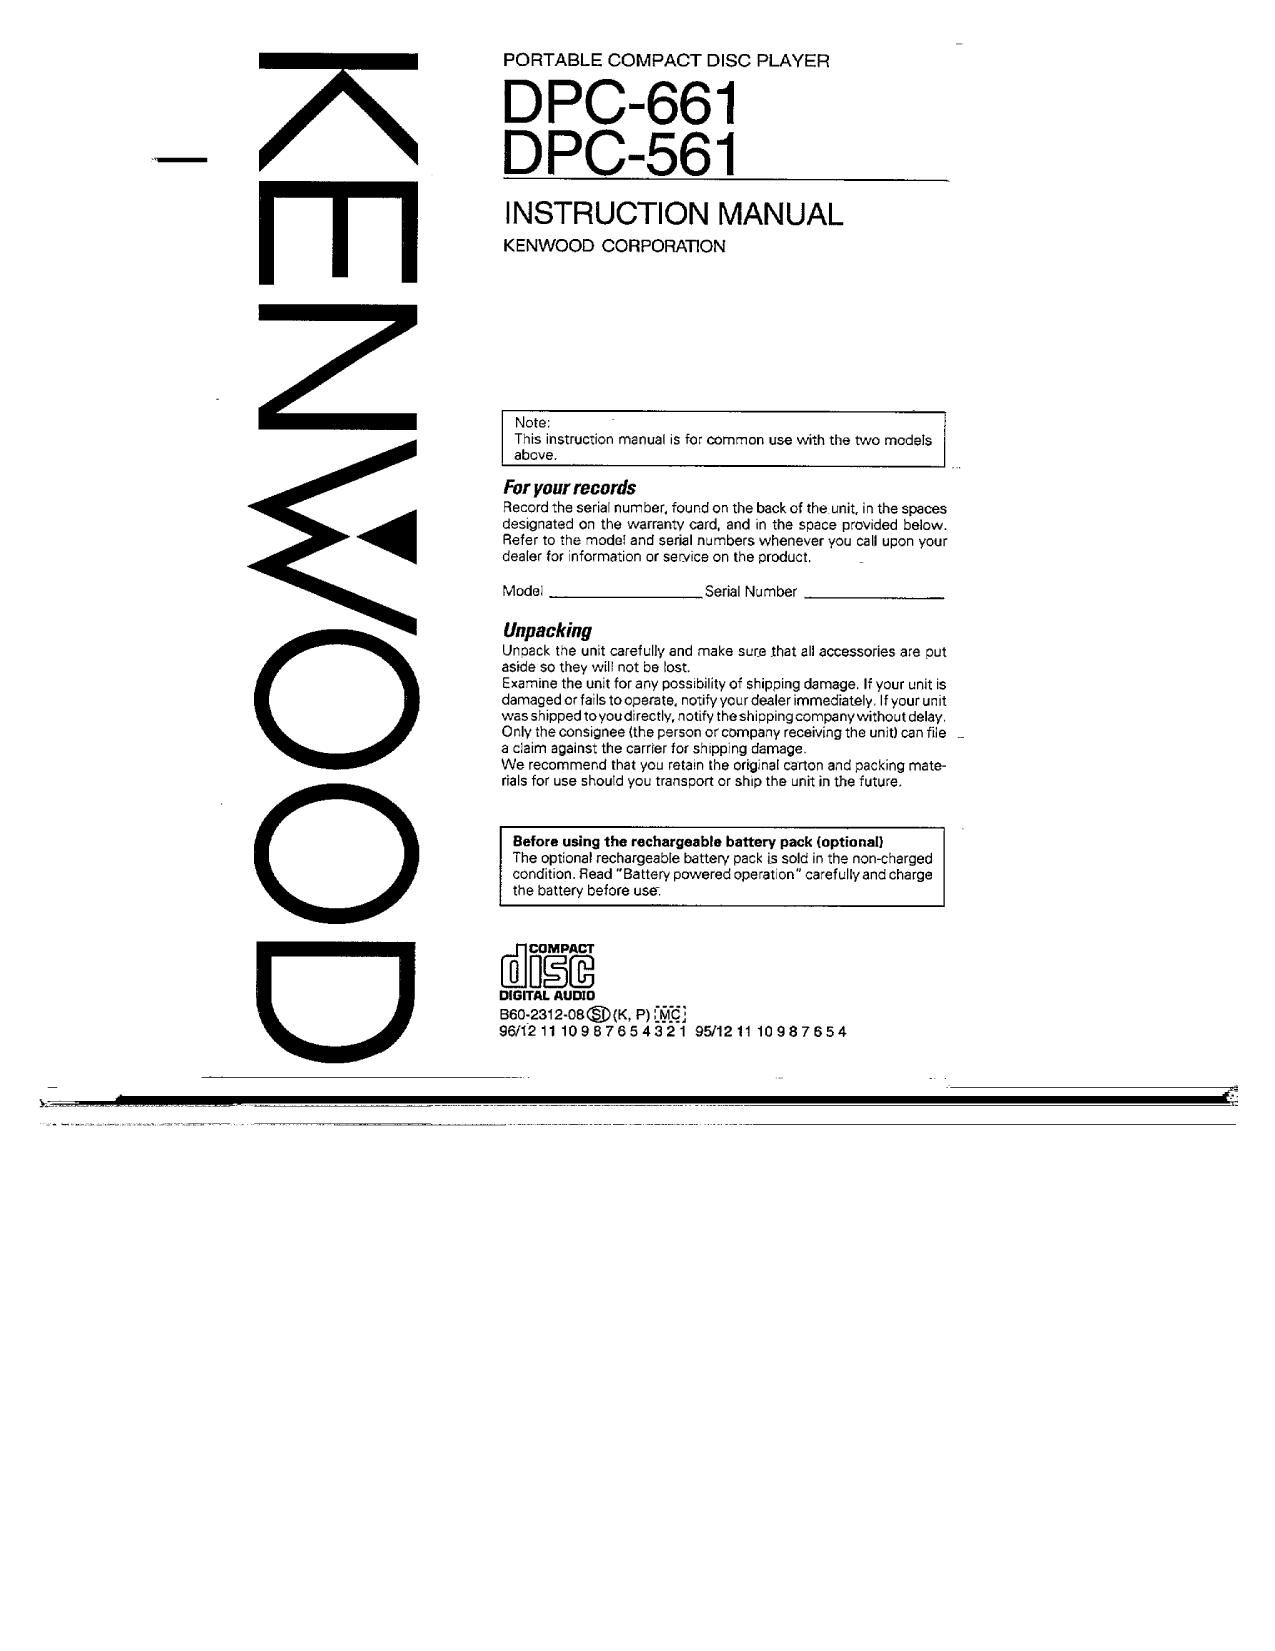 Kenwood DPC 661 Owners Manual